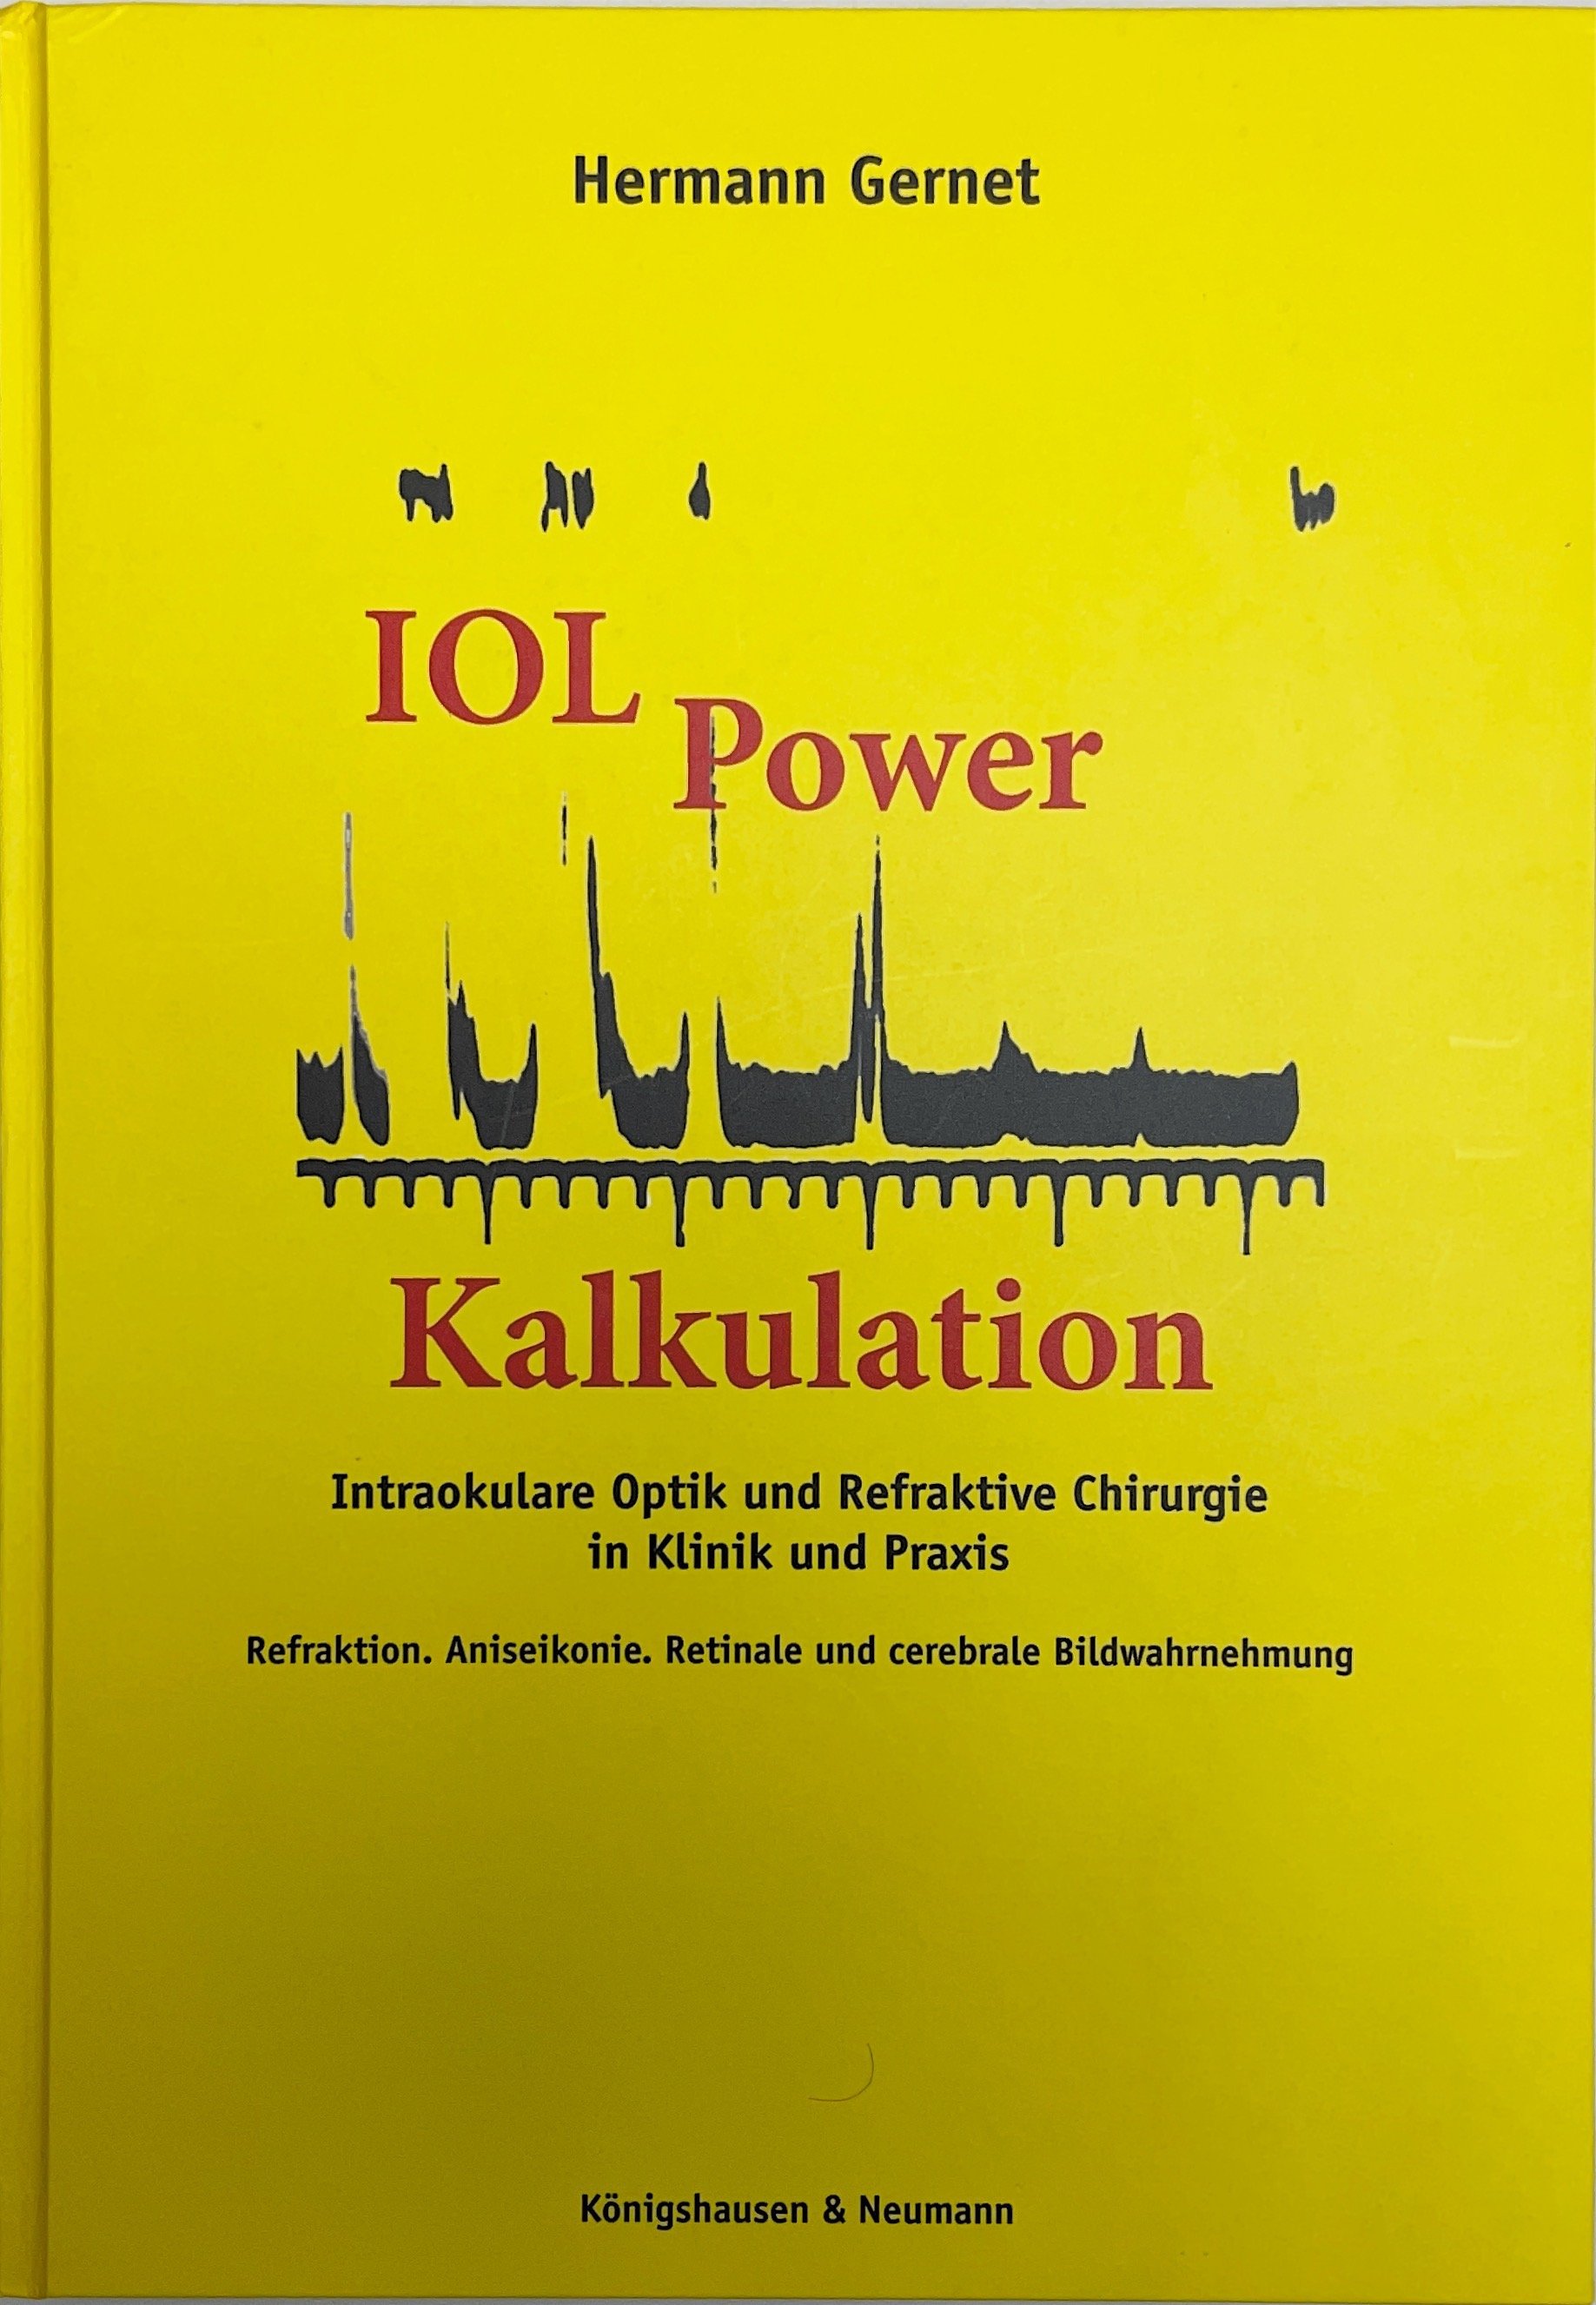 Neue IOL Power Kalkulation, Intraokulare Optik und Refraktive Chirurgie in Klink und Praxis (Krankenhausmuseum Bielefeld e.V. CC BY-NC-SA)